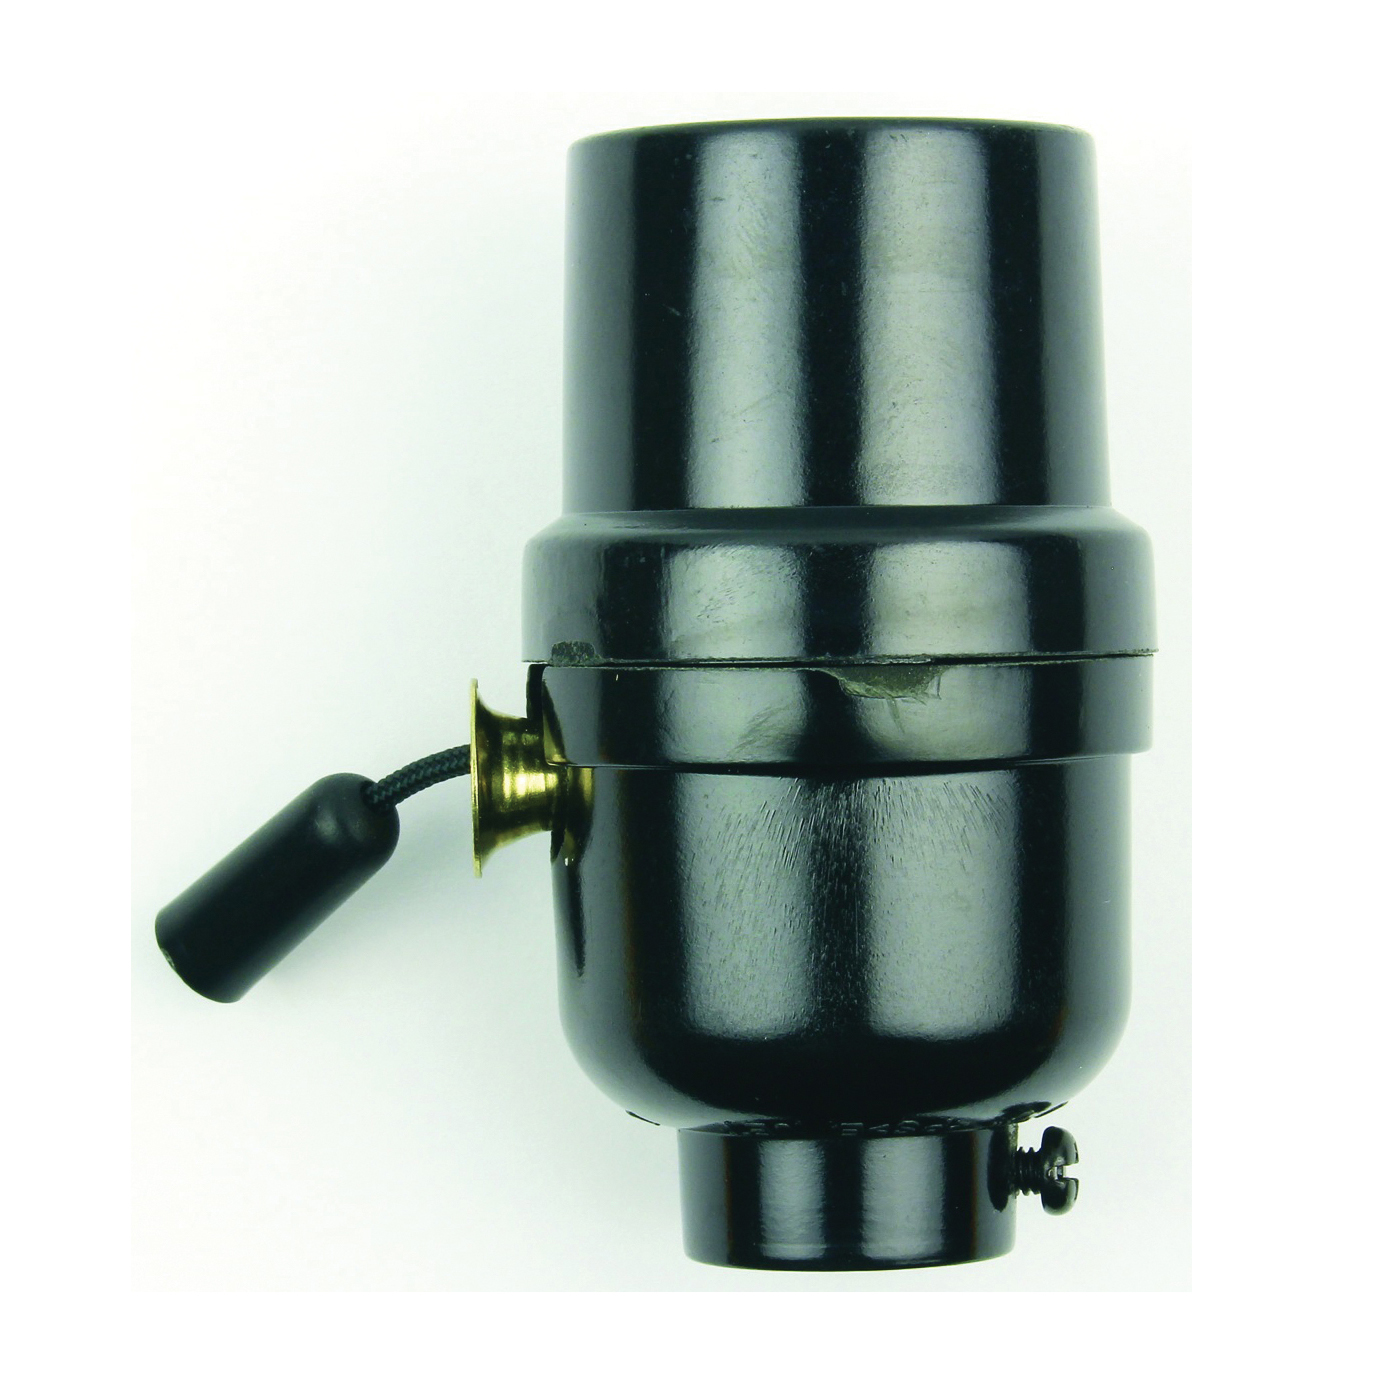 60532 Pull Chain Lamp Socket, 250 V, 250 W, Phenolic Housing Material, Black